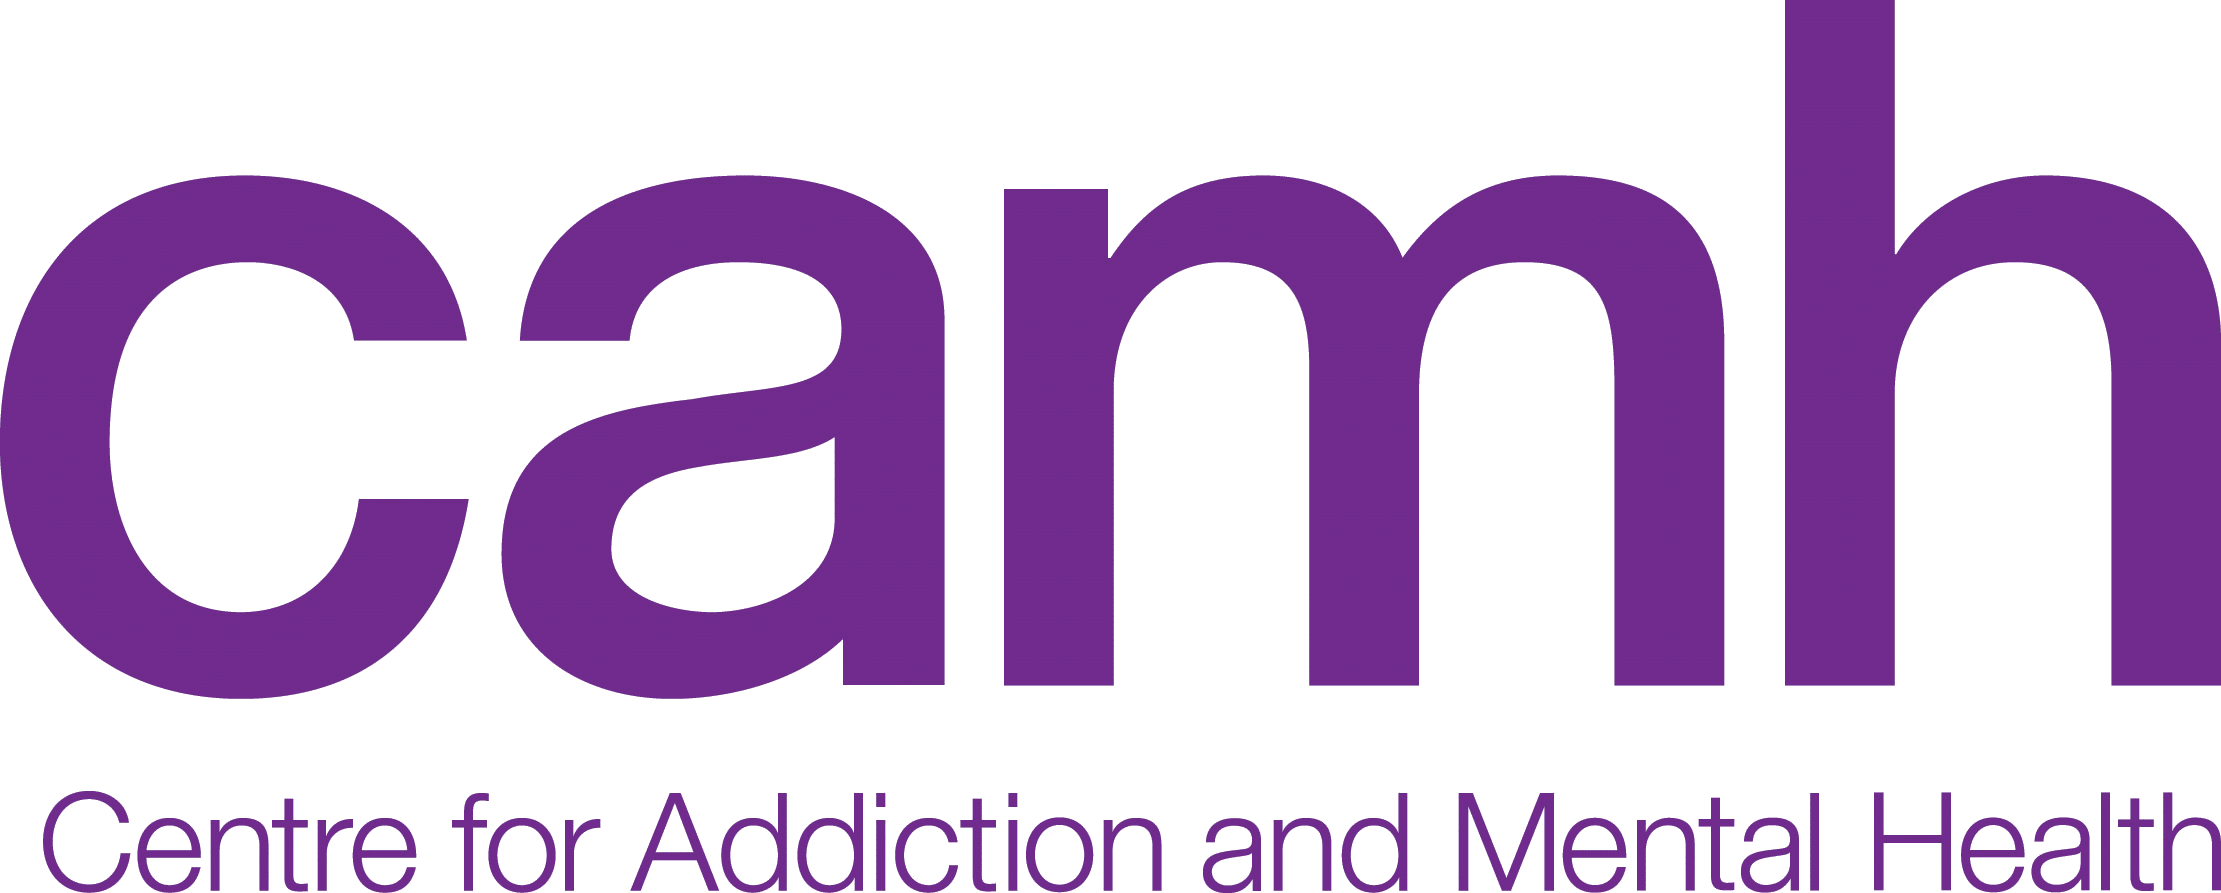 Camh_logo_purple.png